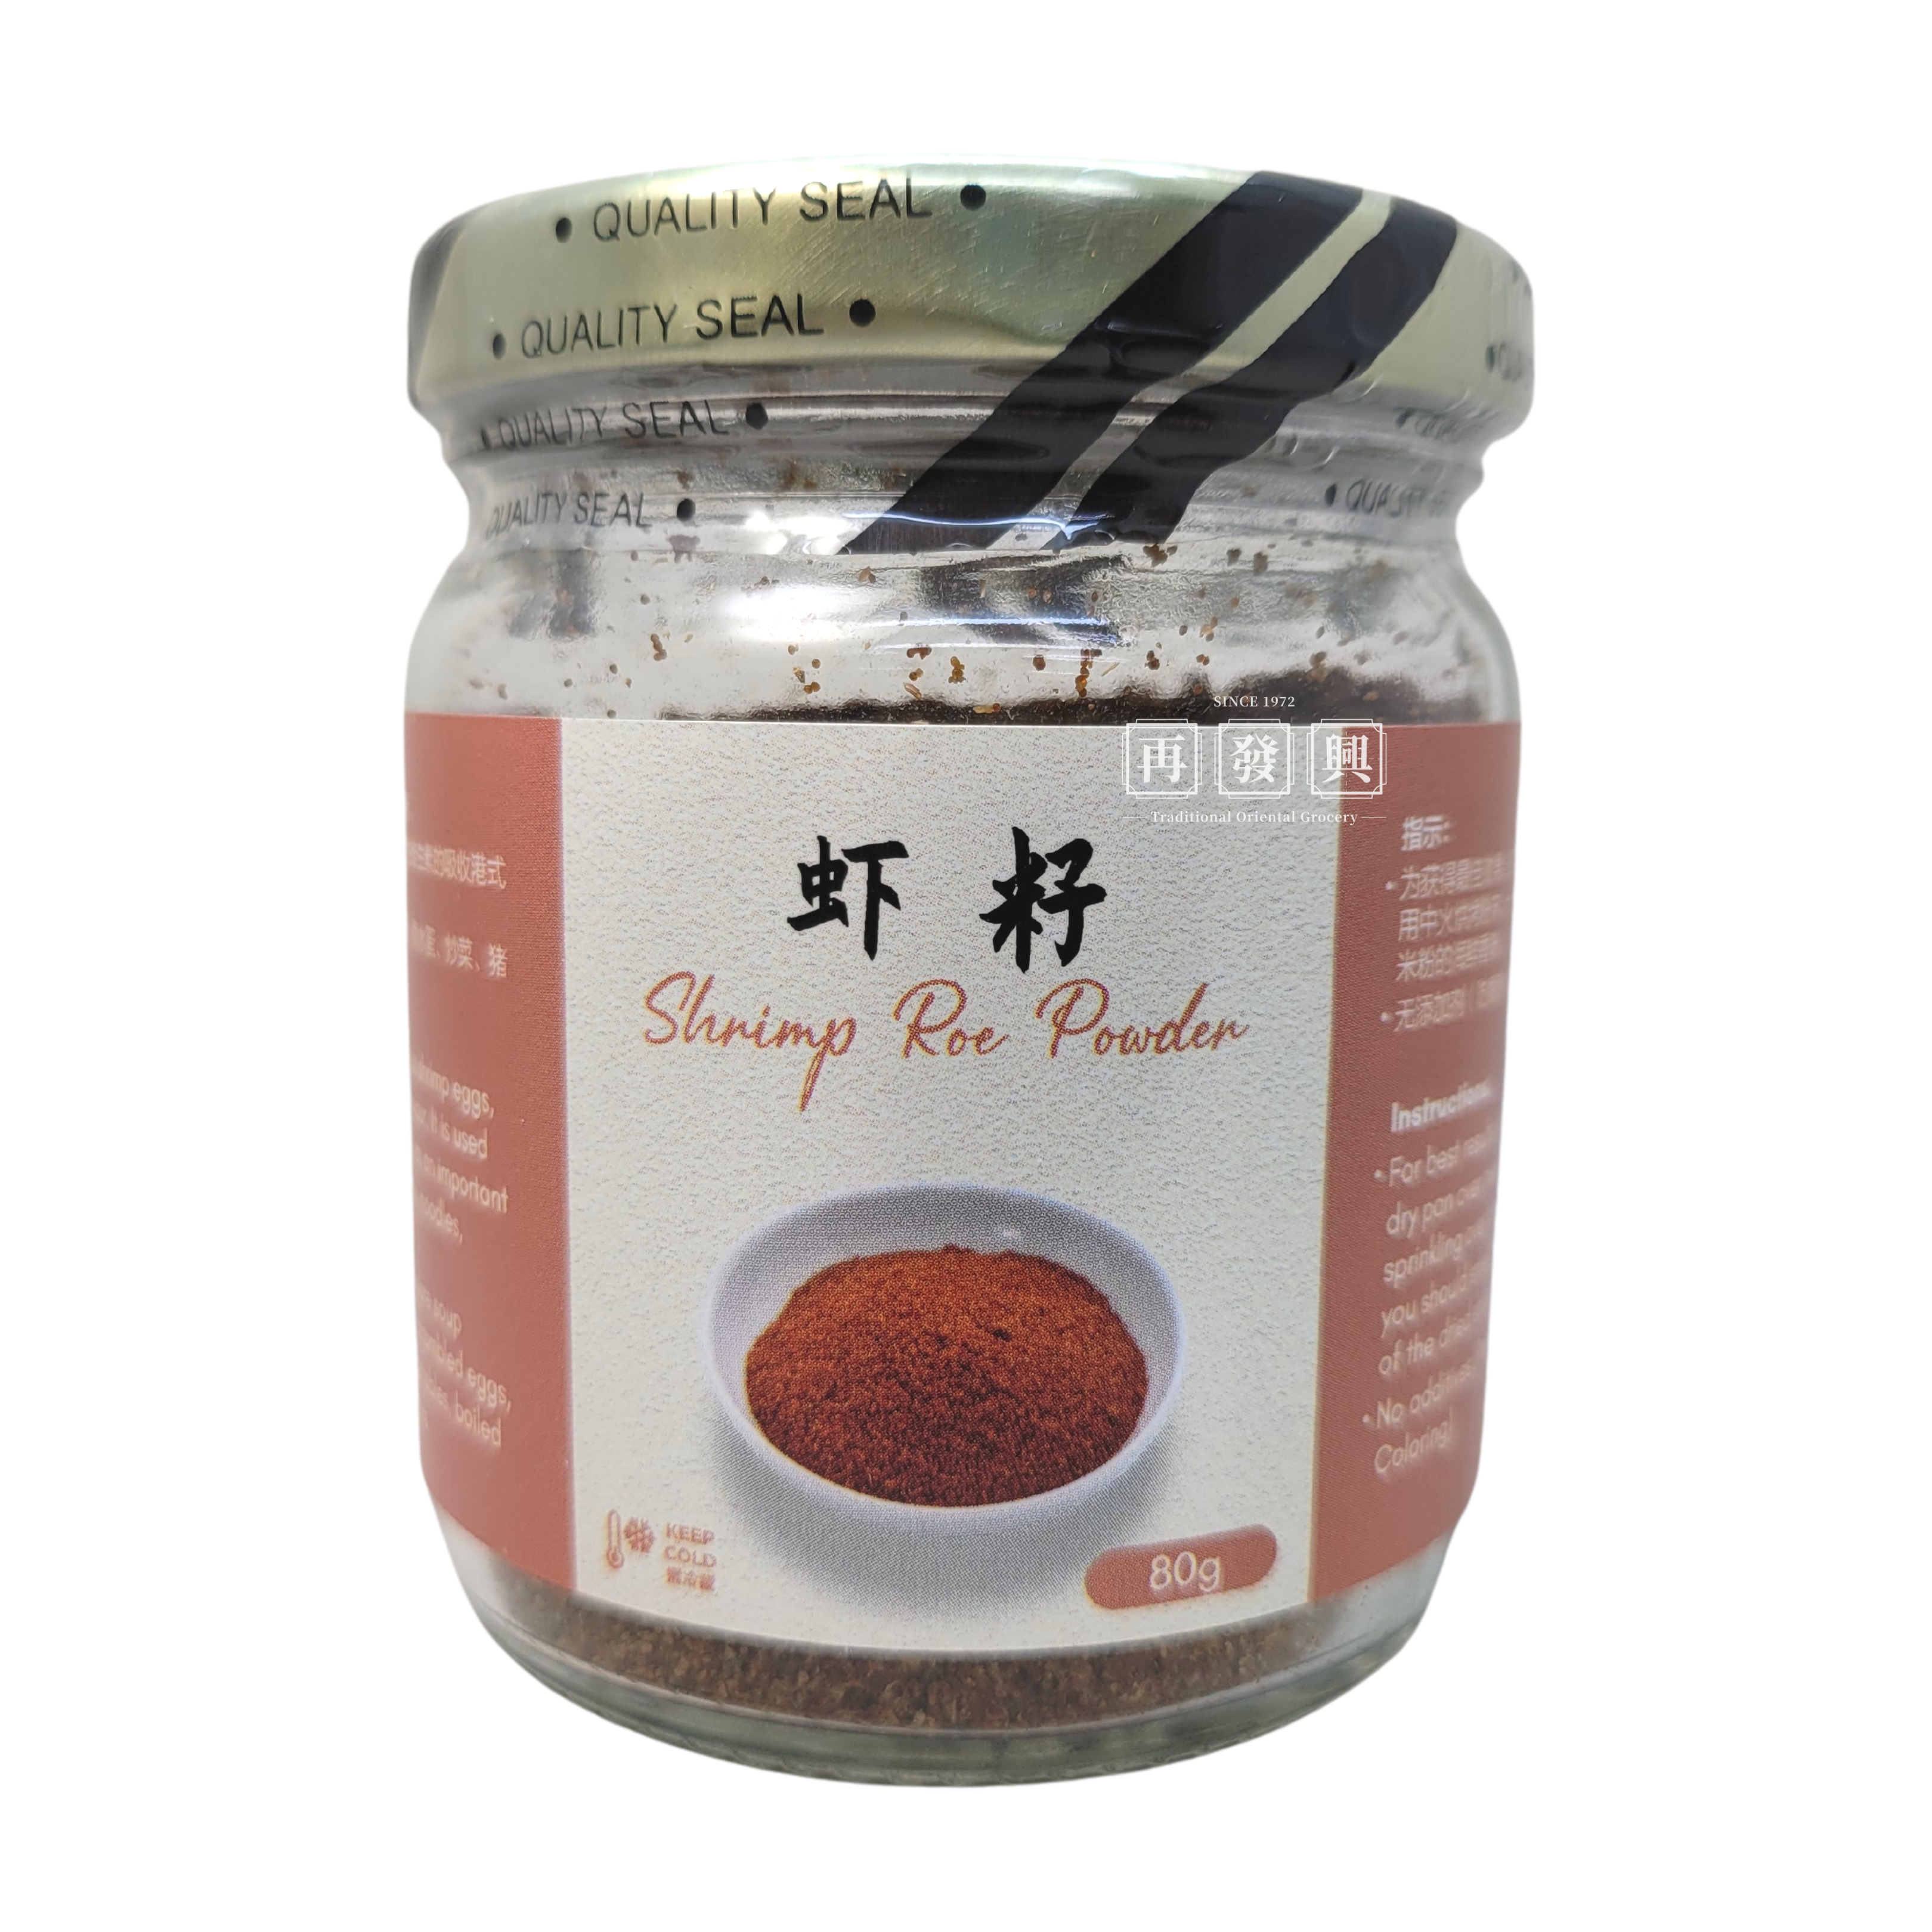 Shrimp Powder Seafood Flavor Powder with Best Quality - China